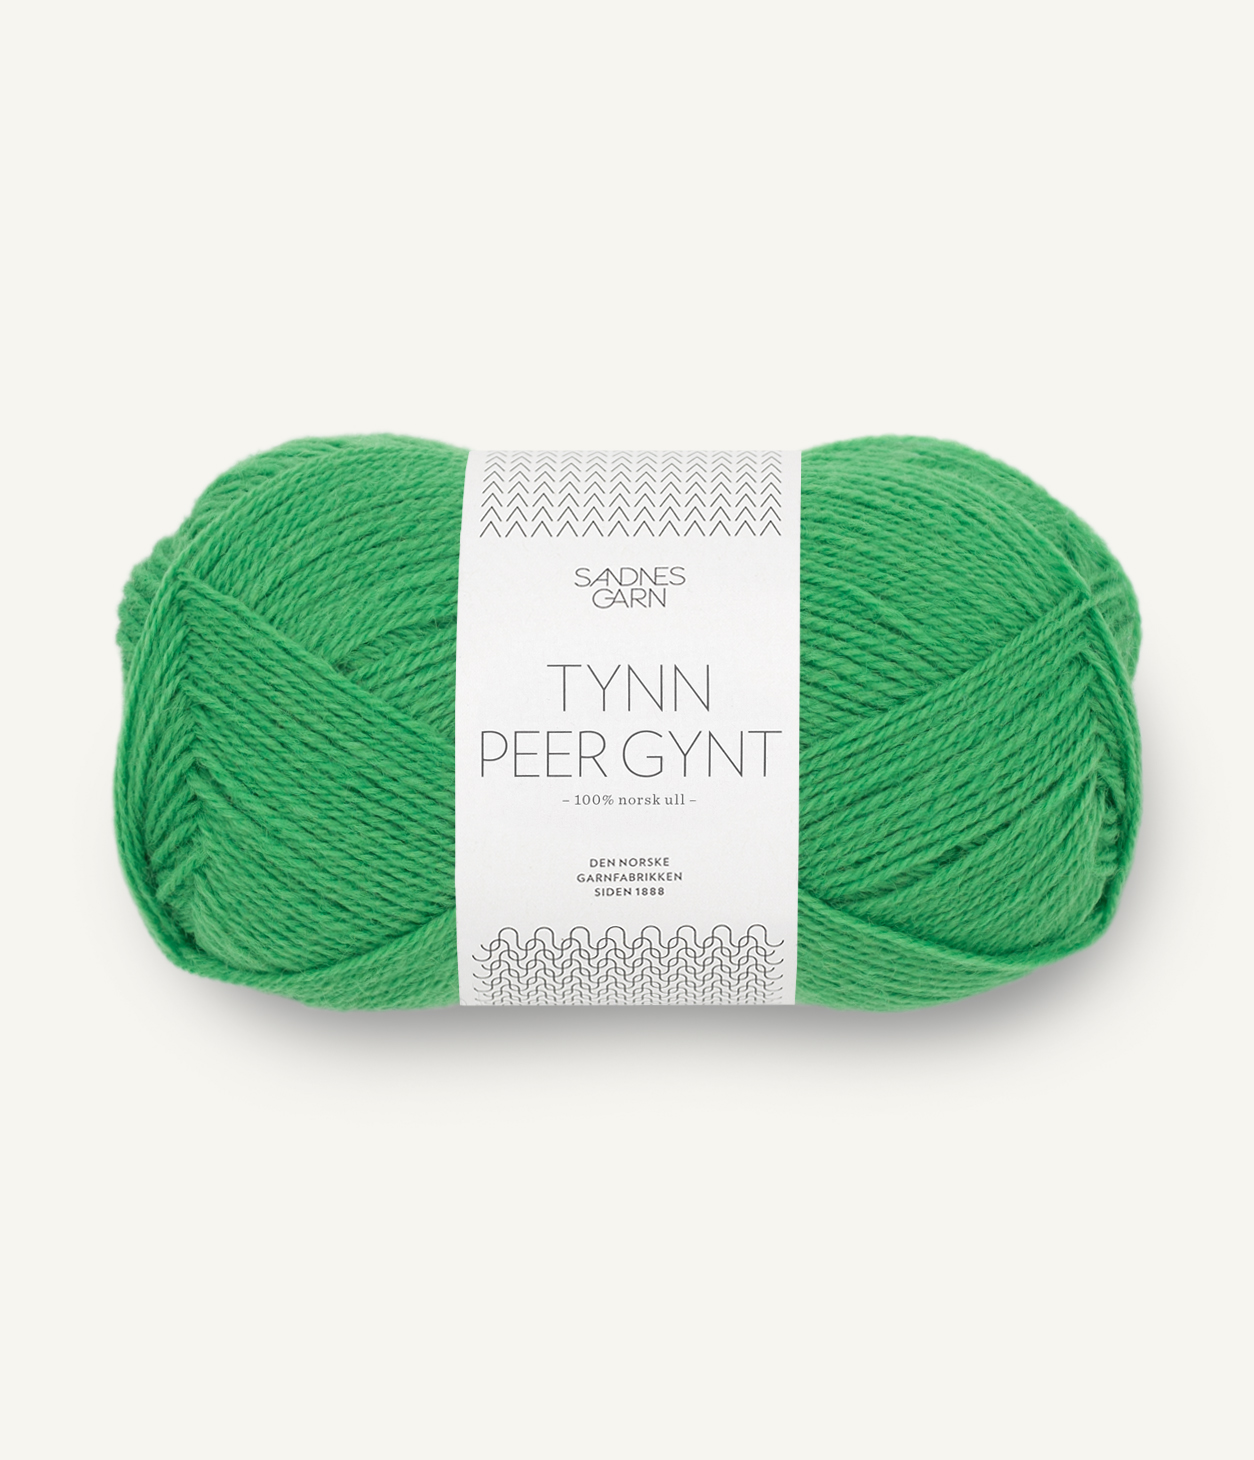 Tynn Peer Gynt 8263 Jelly Bean Green